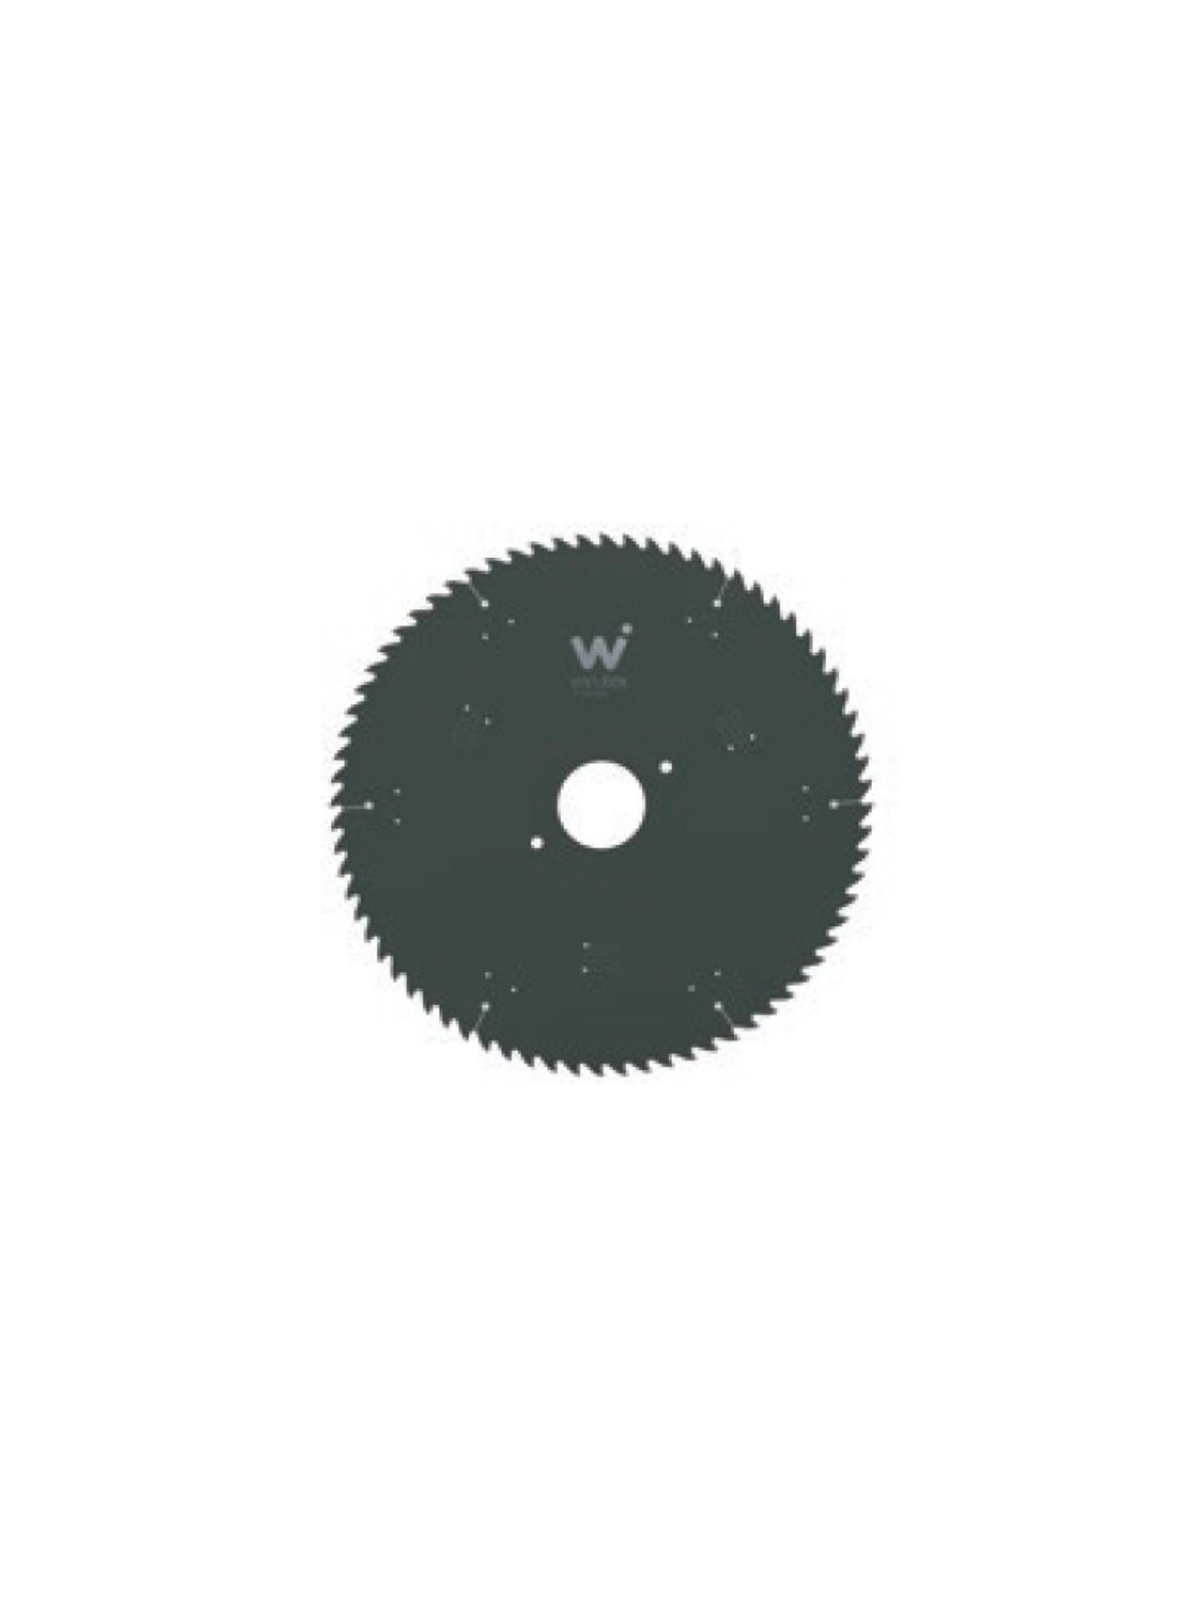 Wirutex PCD Main Saw blade for Biesse Selco D600mm | JVL-Europe